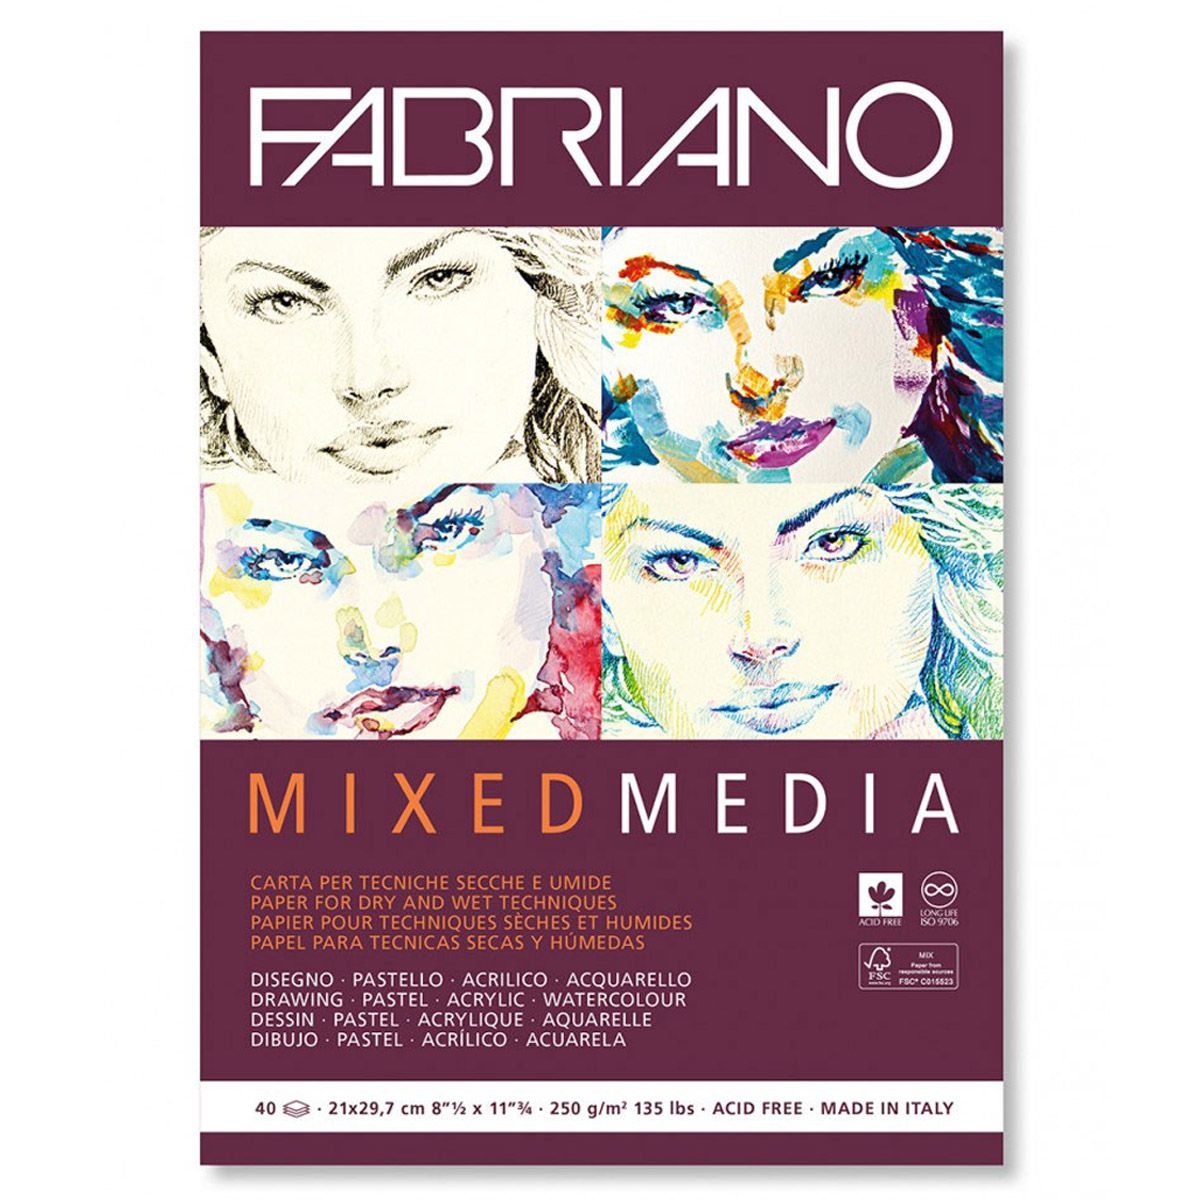 Fabriano Mixed Media 40 sheets Block 8-1/2 x 11-1/2 inches